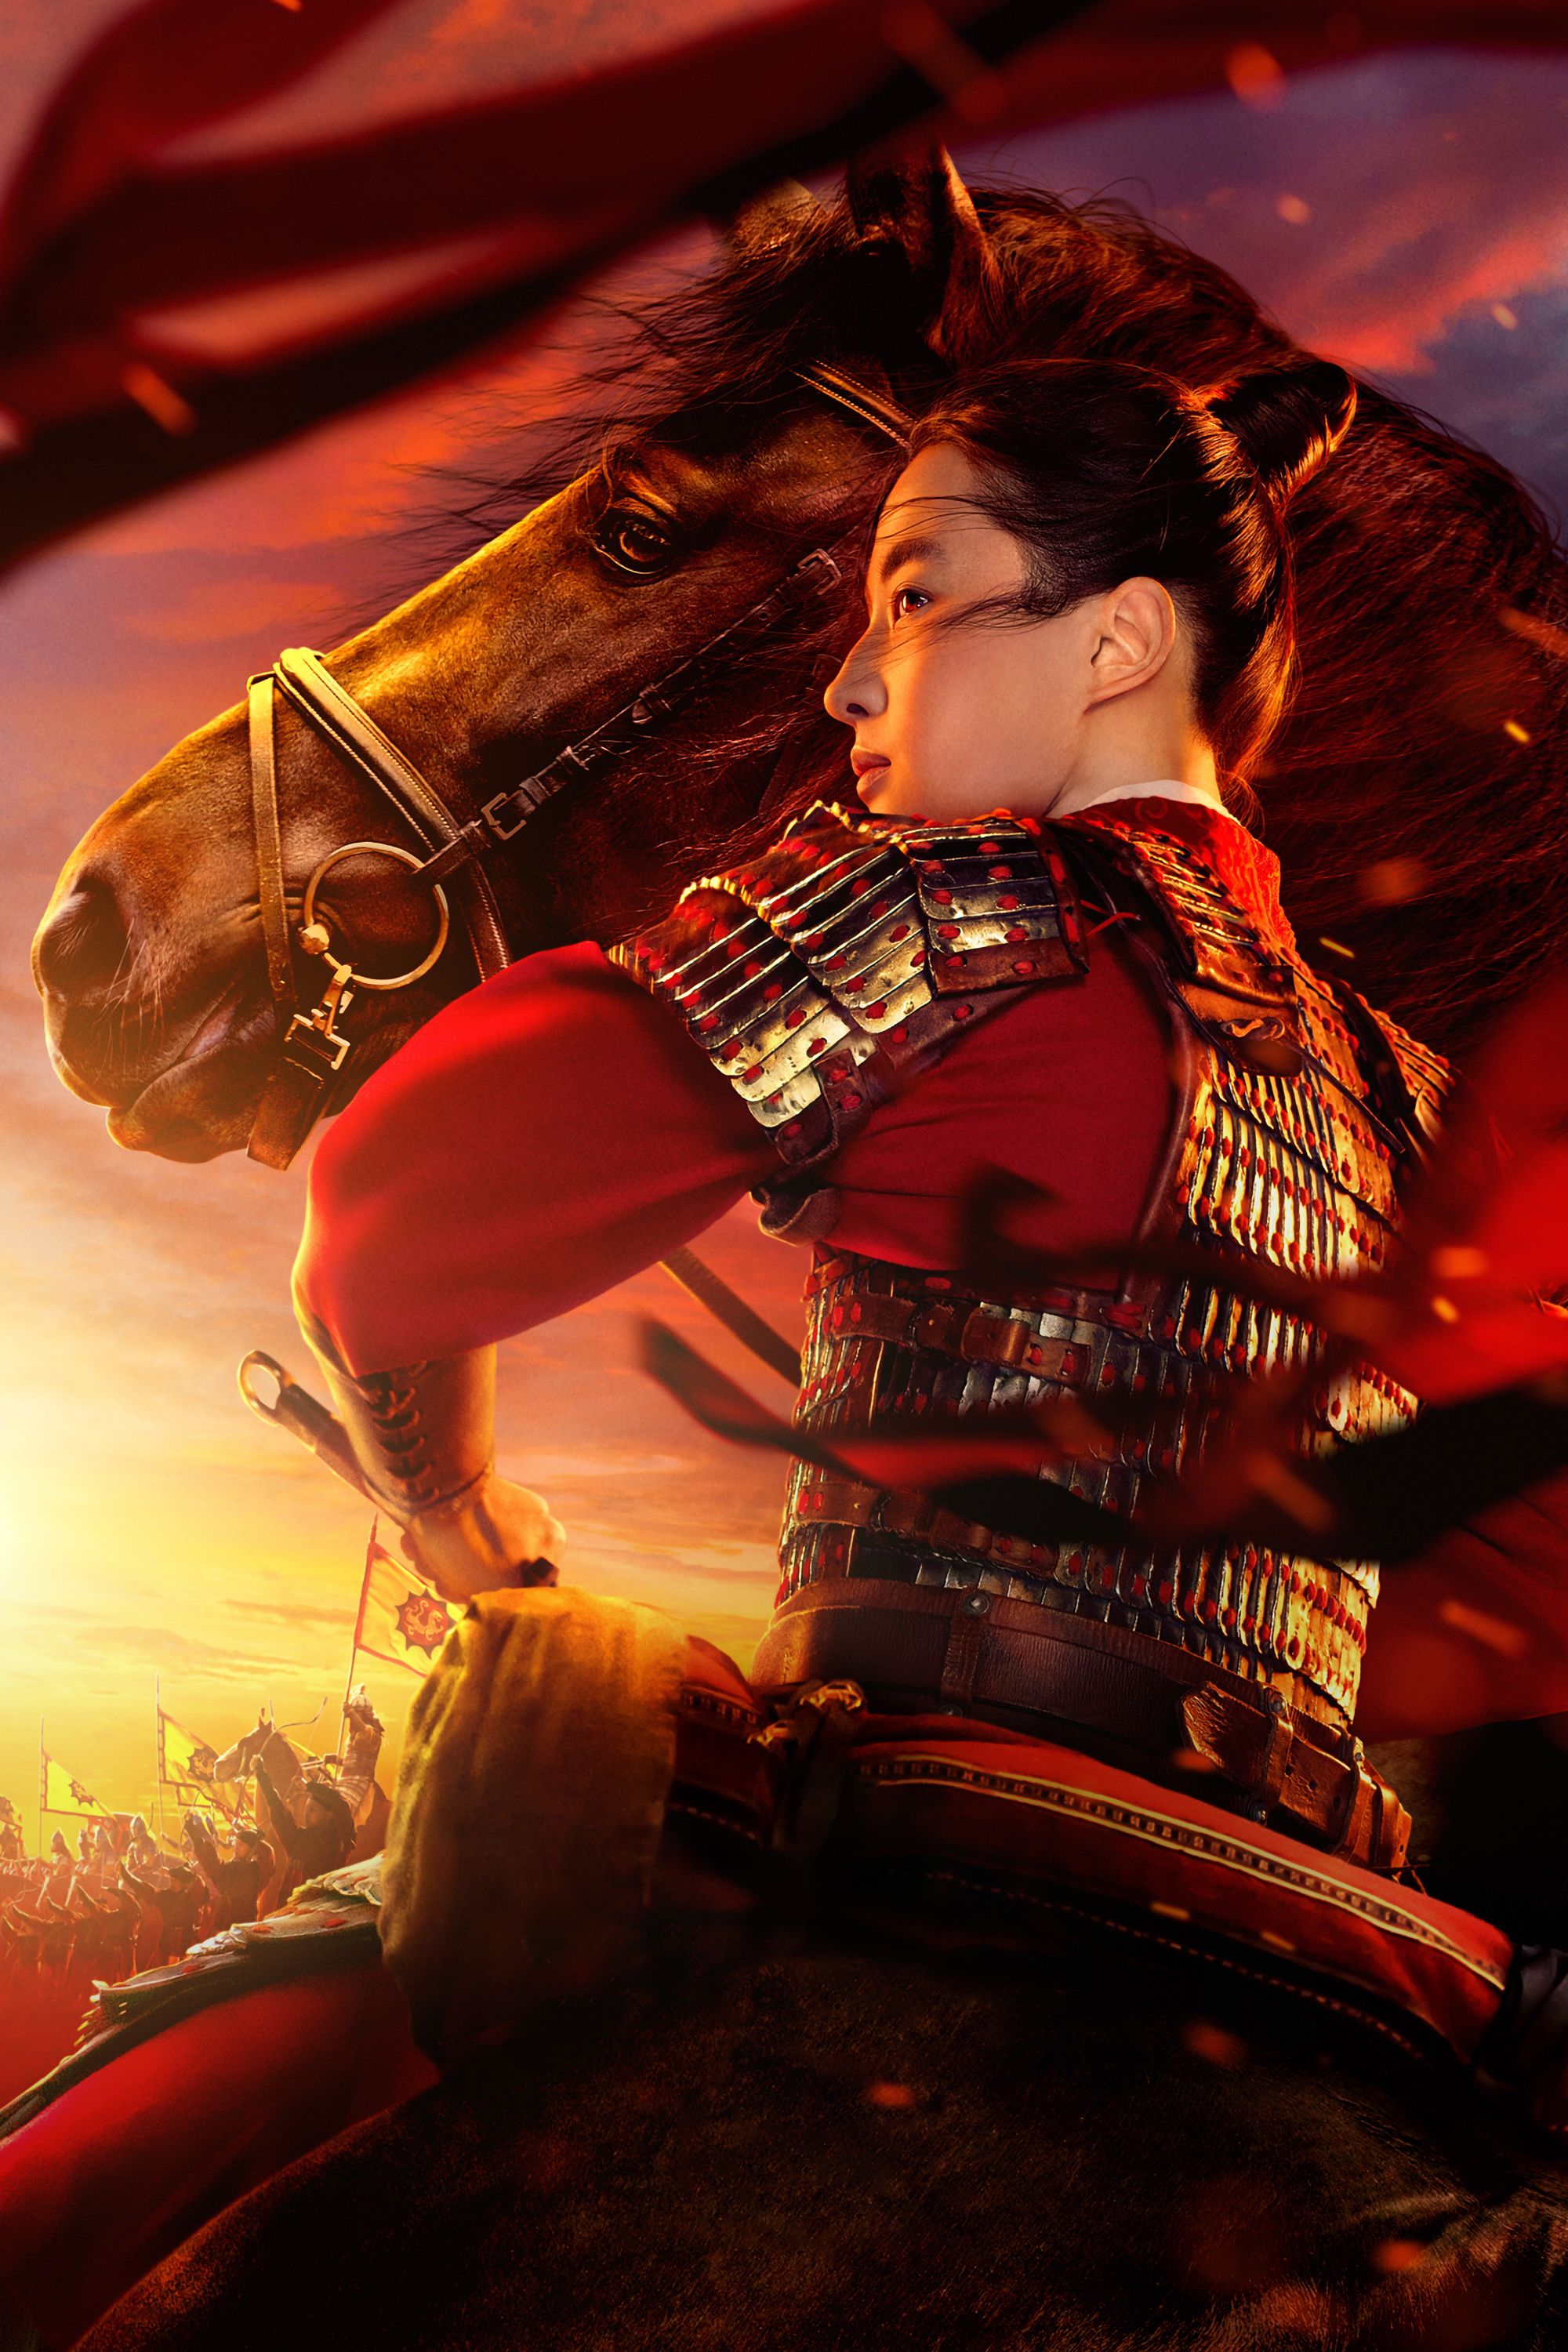 Disney Mulan 2020 Wallpaper, HD Movies 4K Wallpaper, Image, Photo and Background